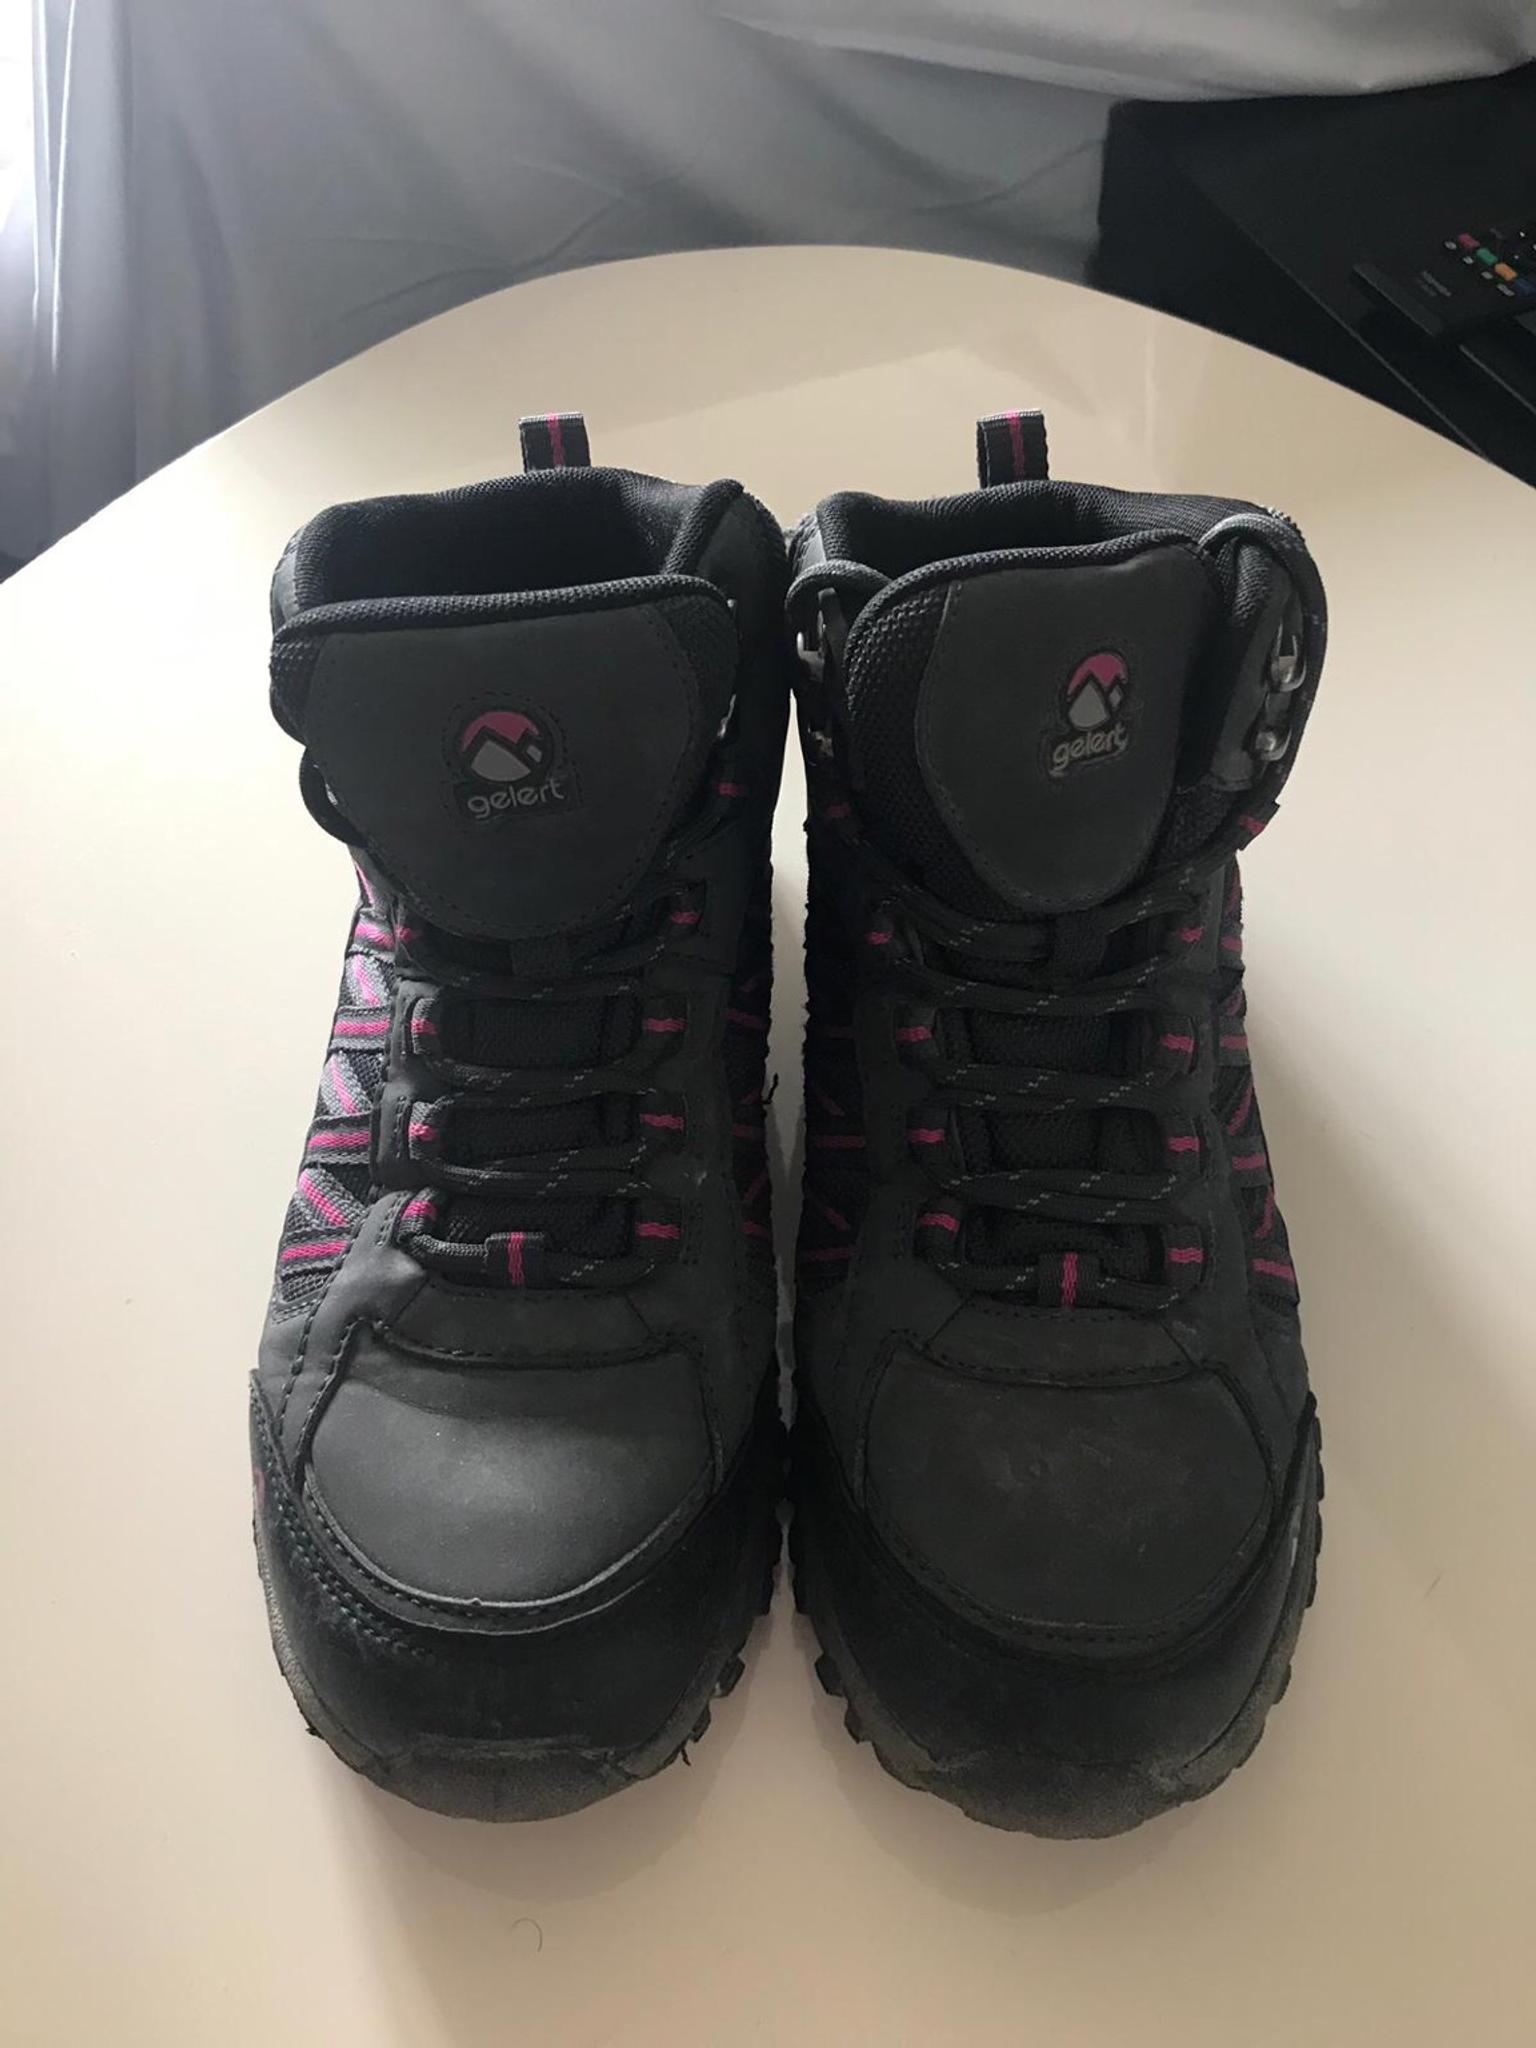 Gelert Womens Horizon Mid Waterproof Walking Boots Lace Up